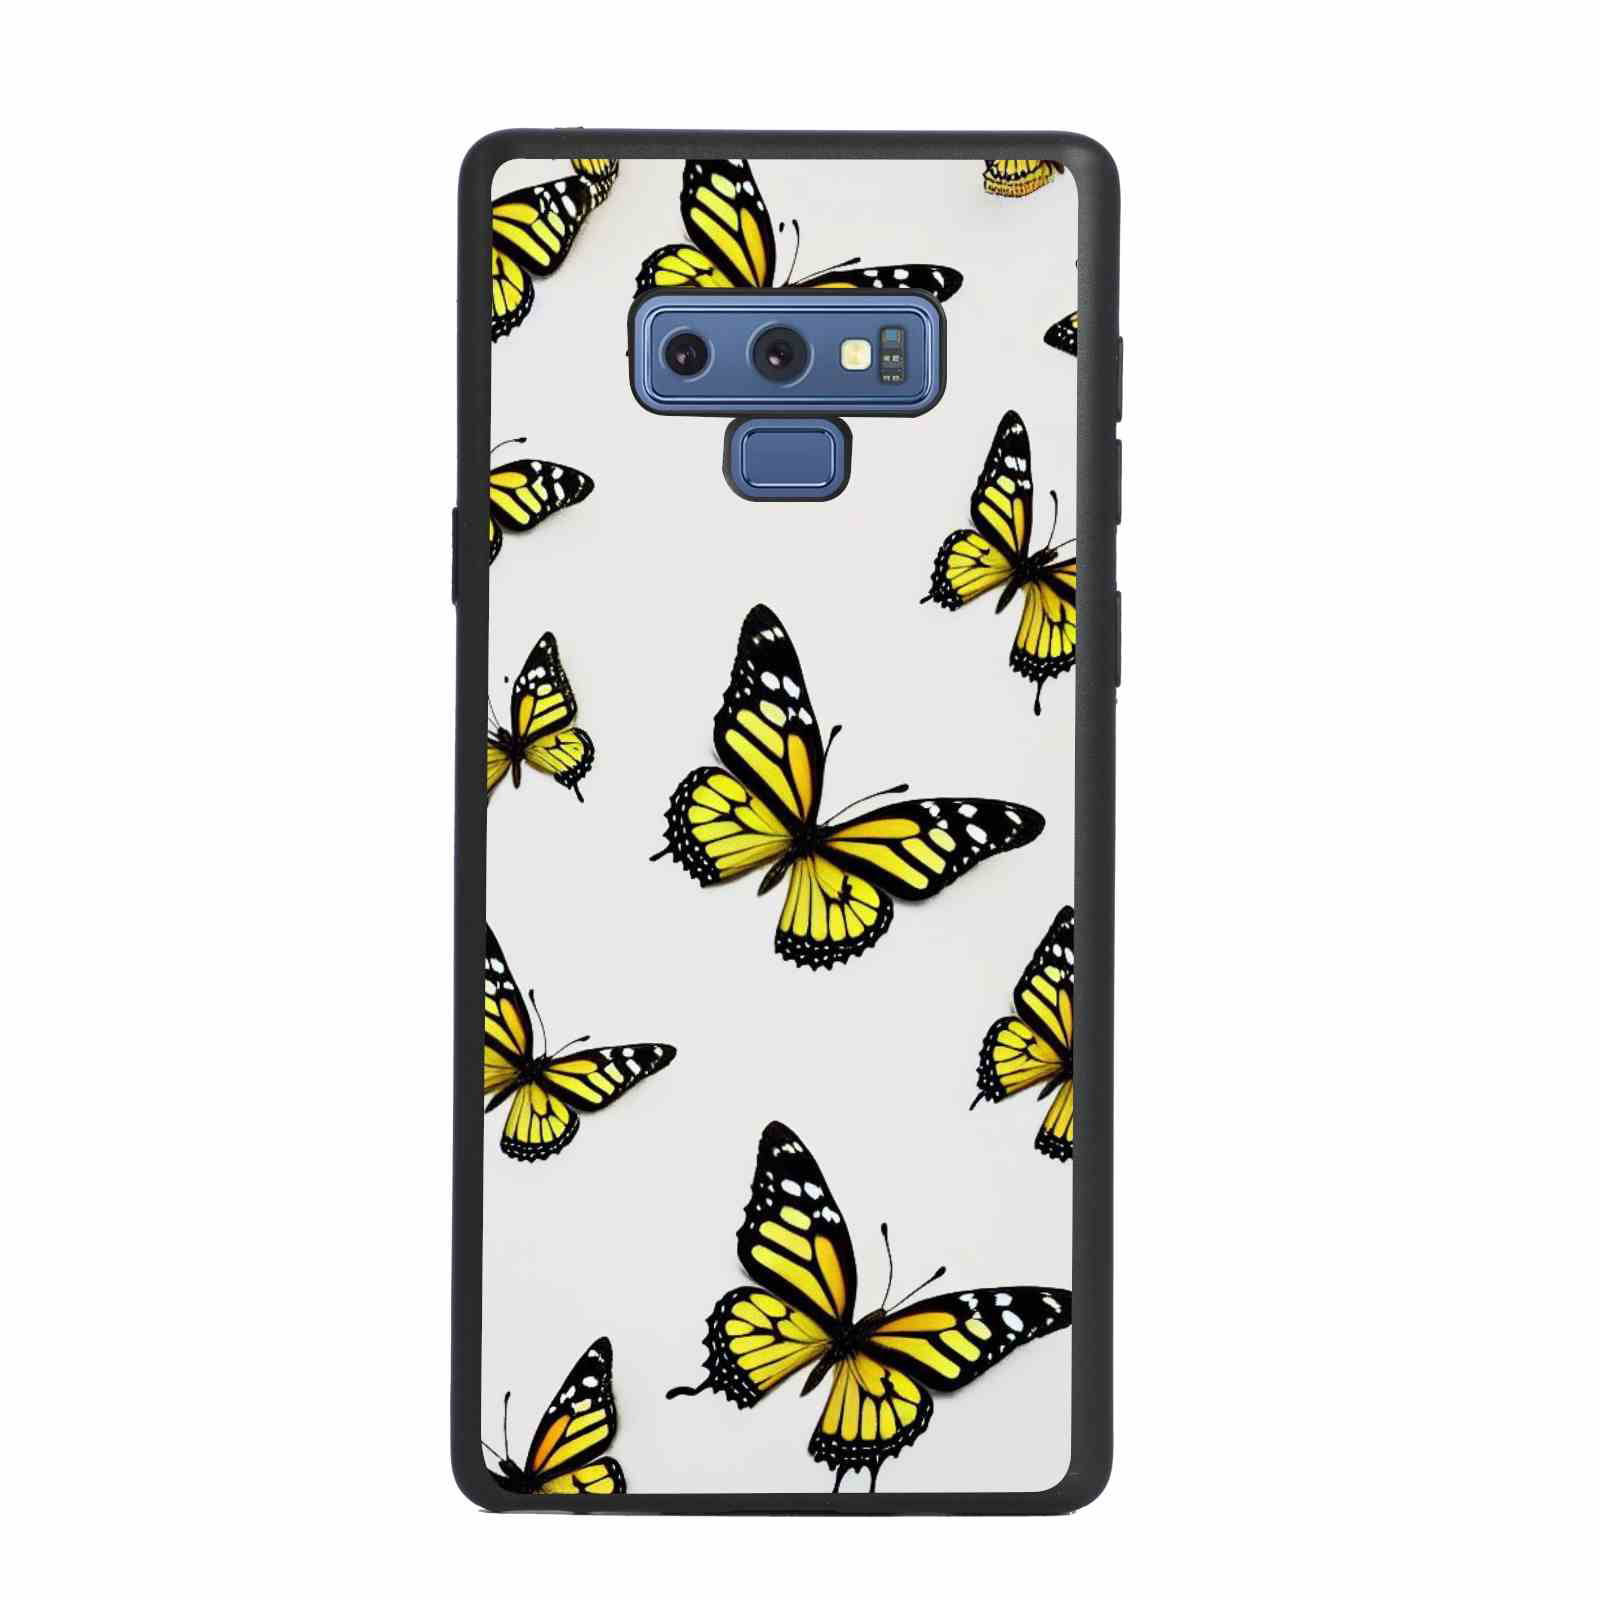 Fashion Cartoon Glitter Butterfly Cover For Samsung Galaxy Z Flip